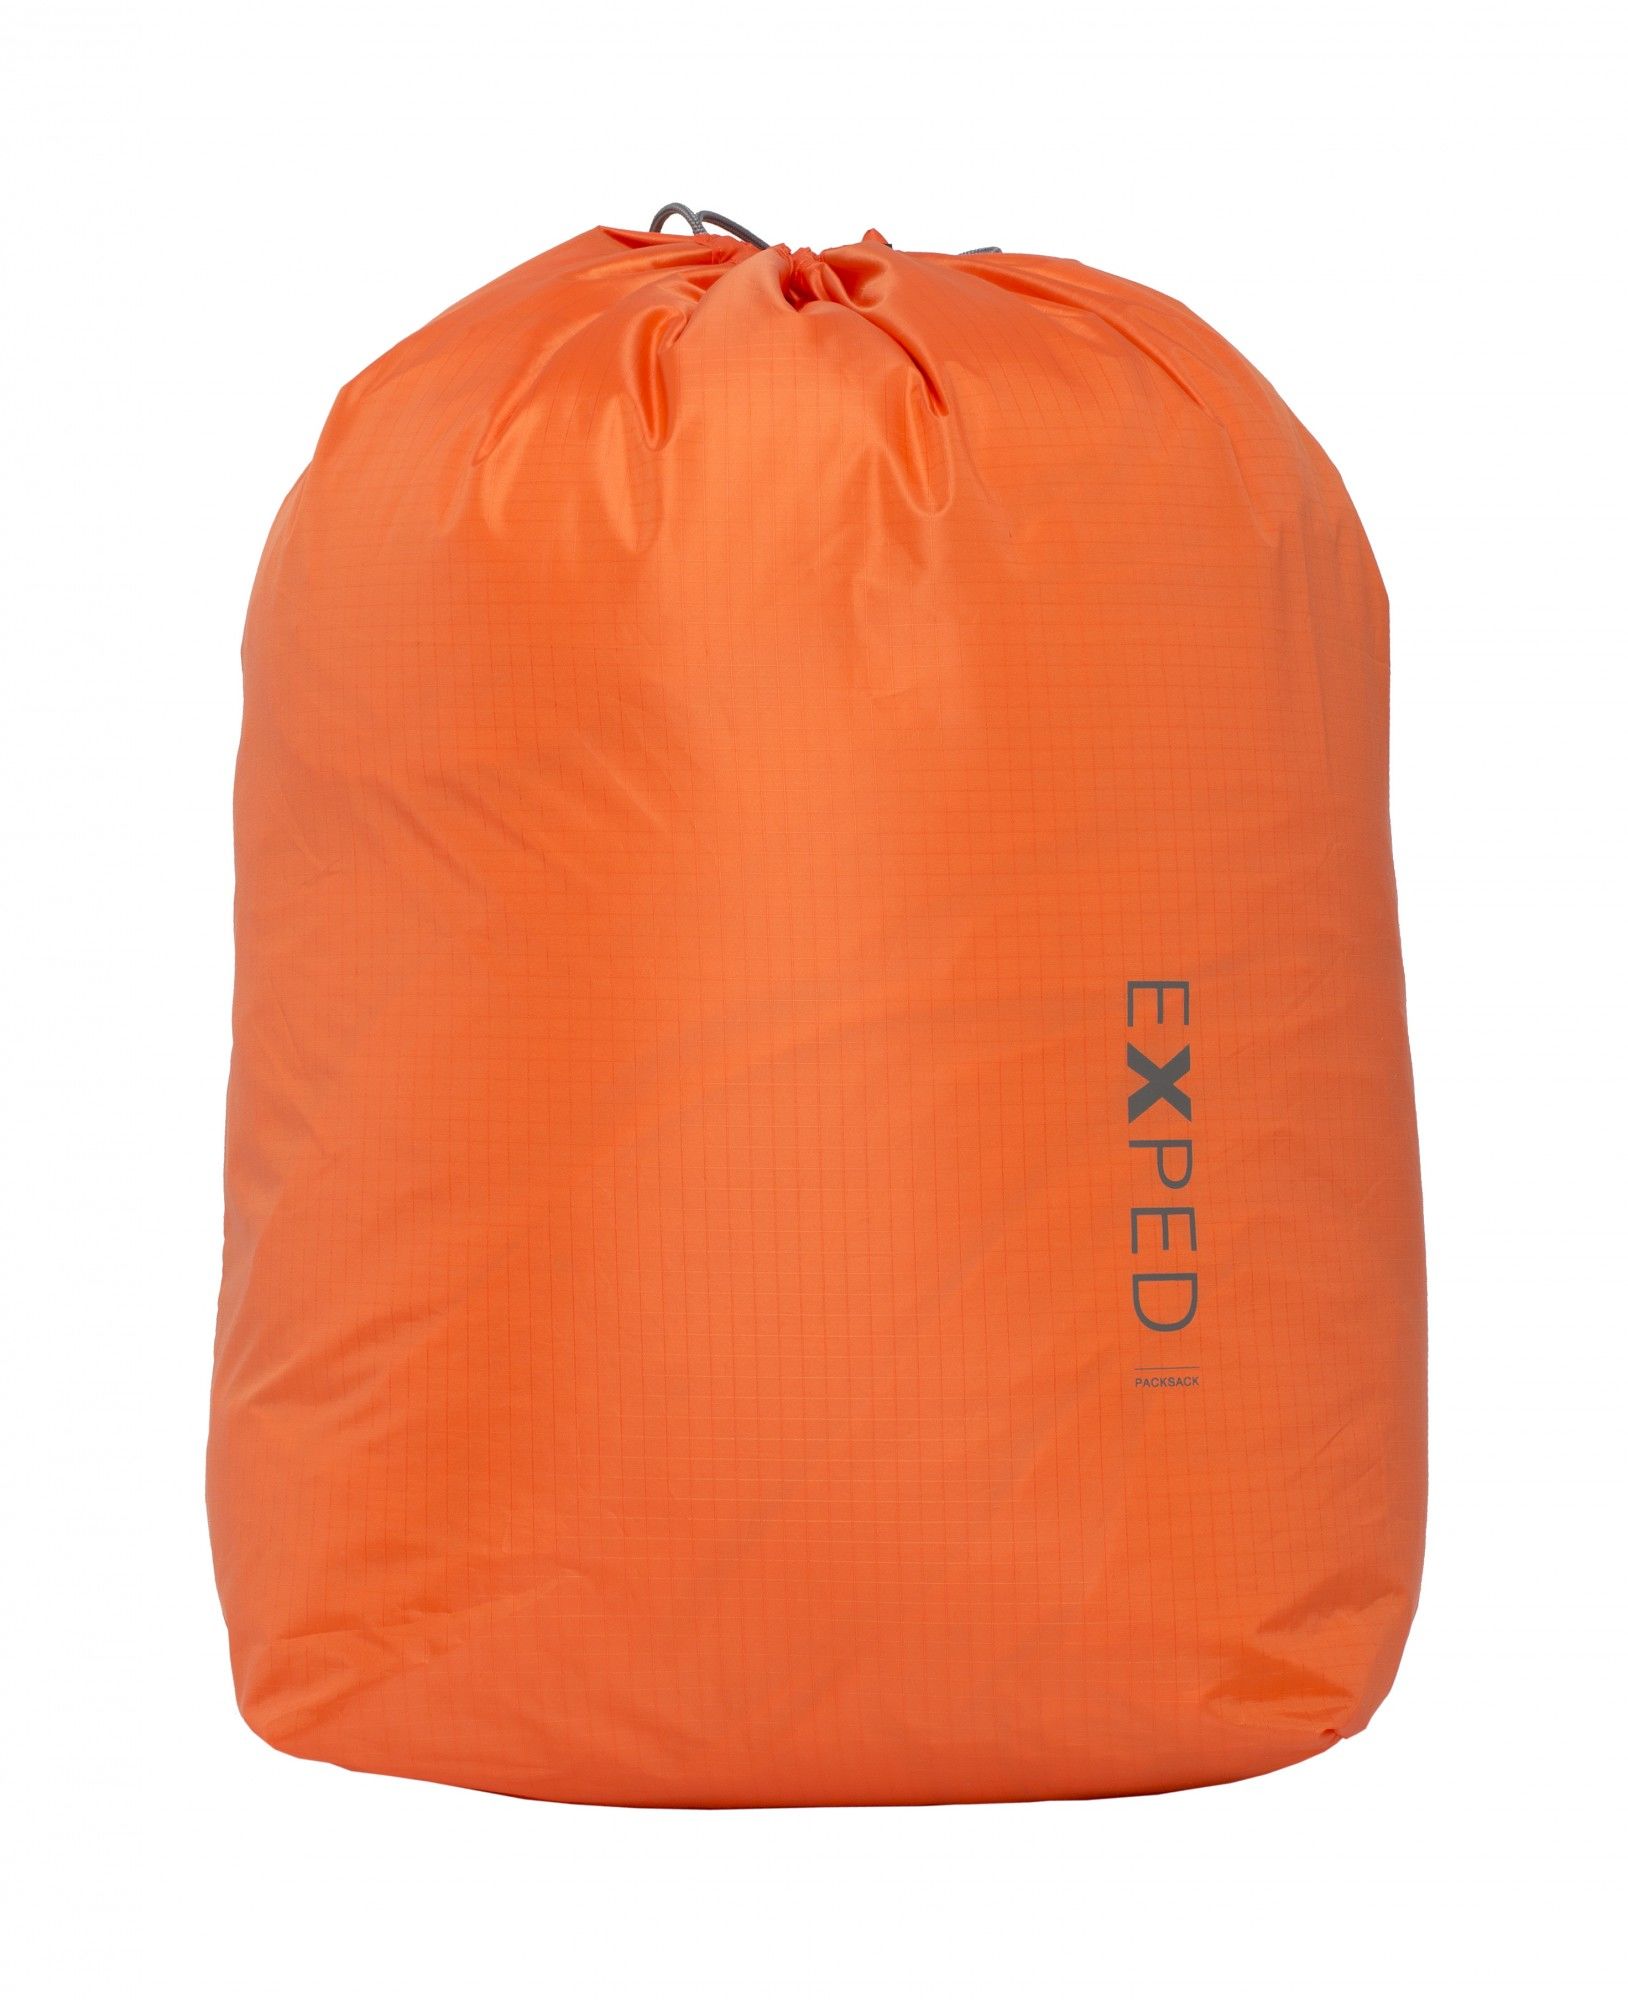 Exped Hochwertiger leichter Packsack  20l Orange